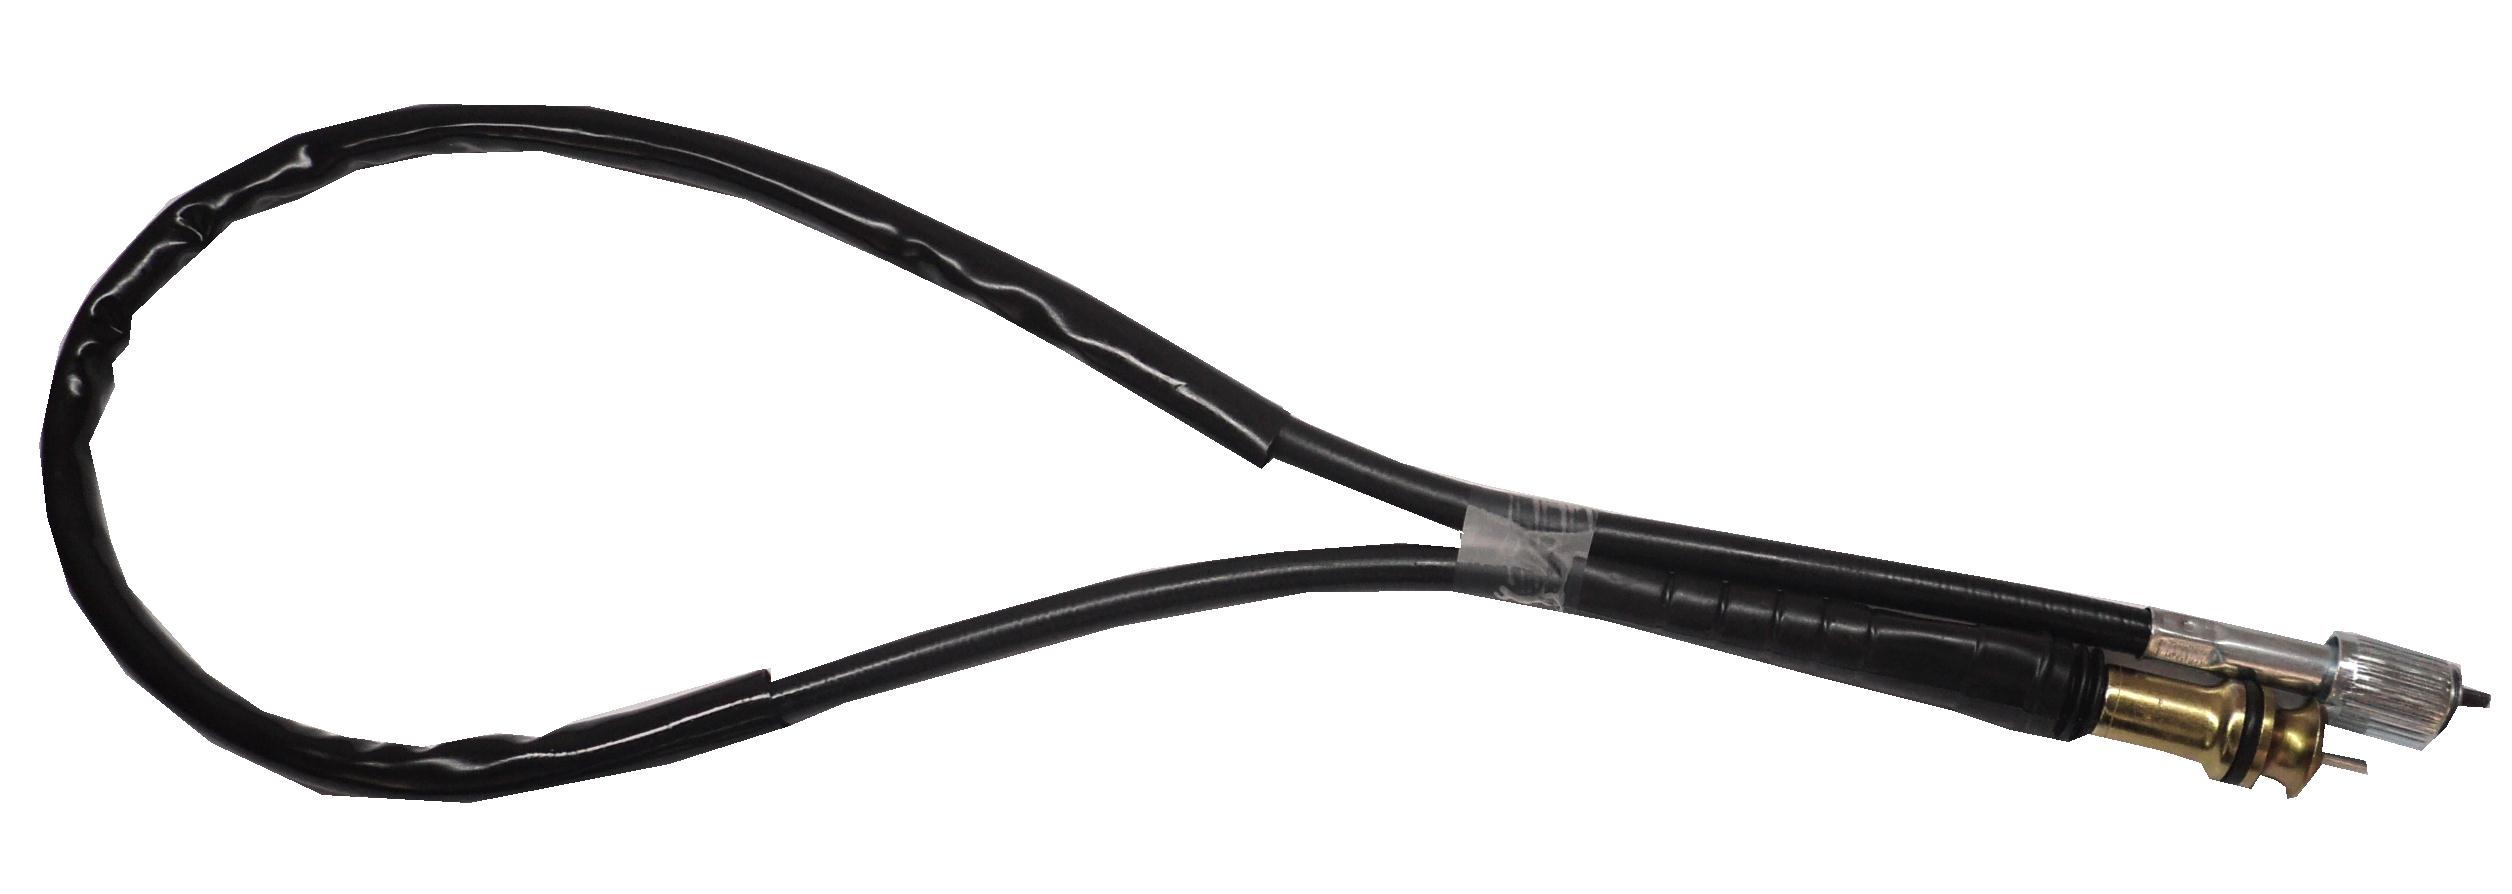 Cable Aspirometro An125